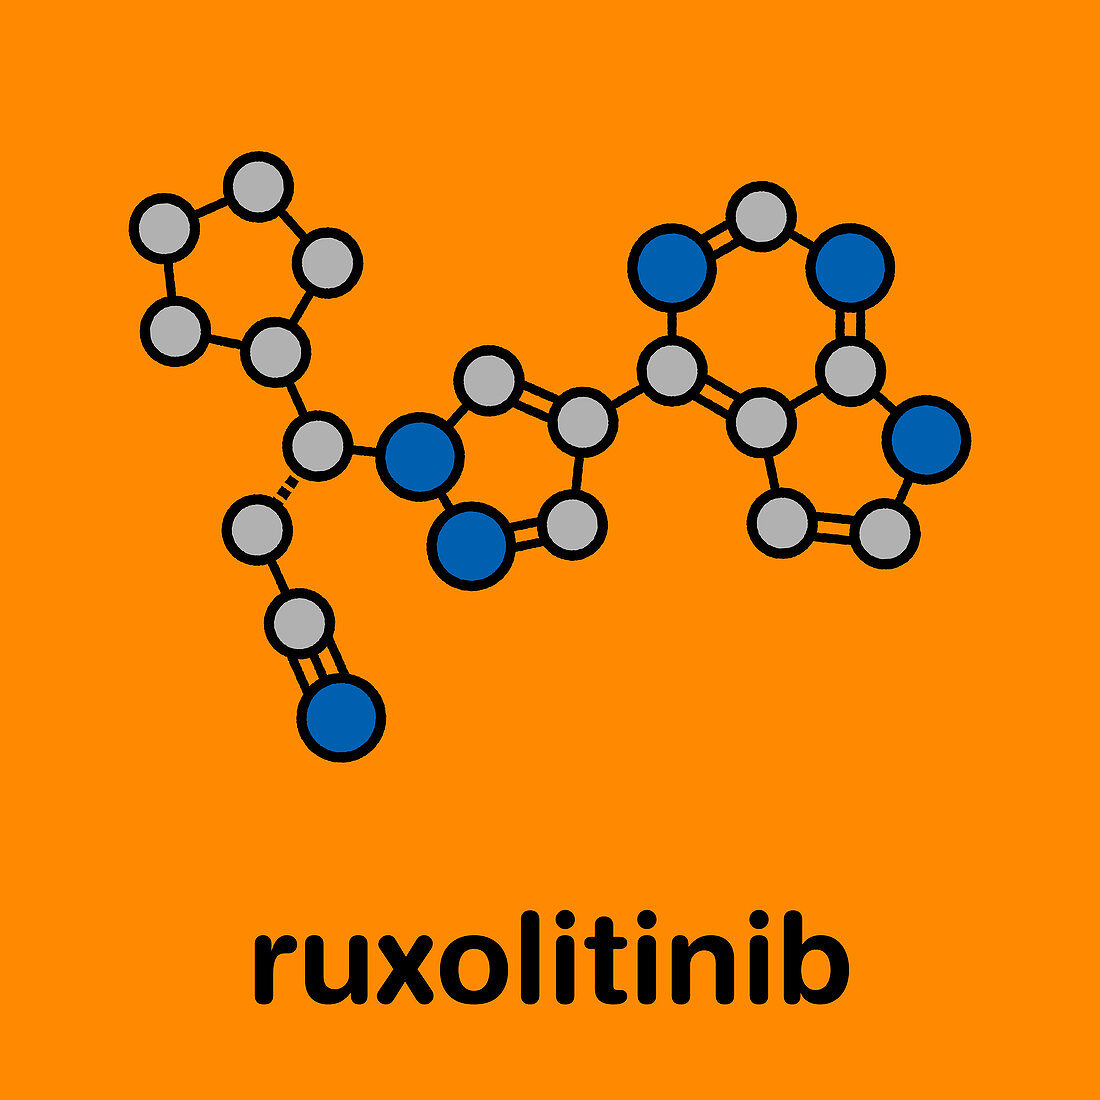 Ruxolitinib myelofibrosis cancer drug, molecular model